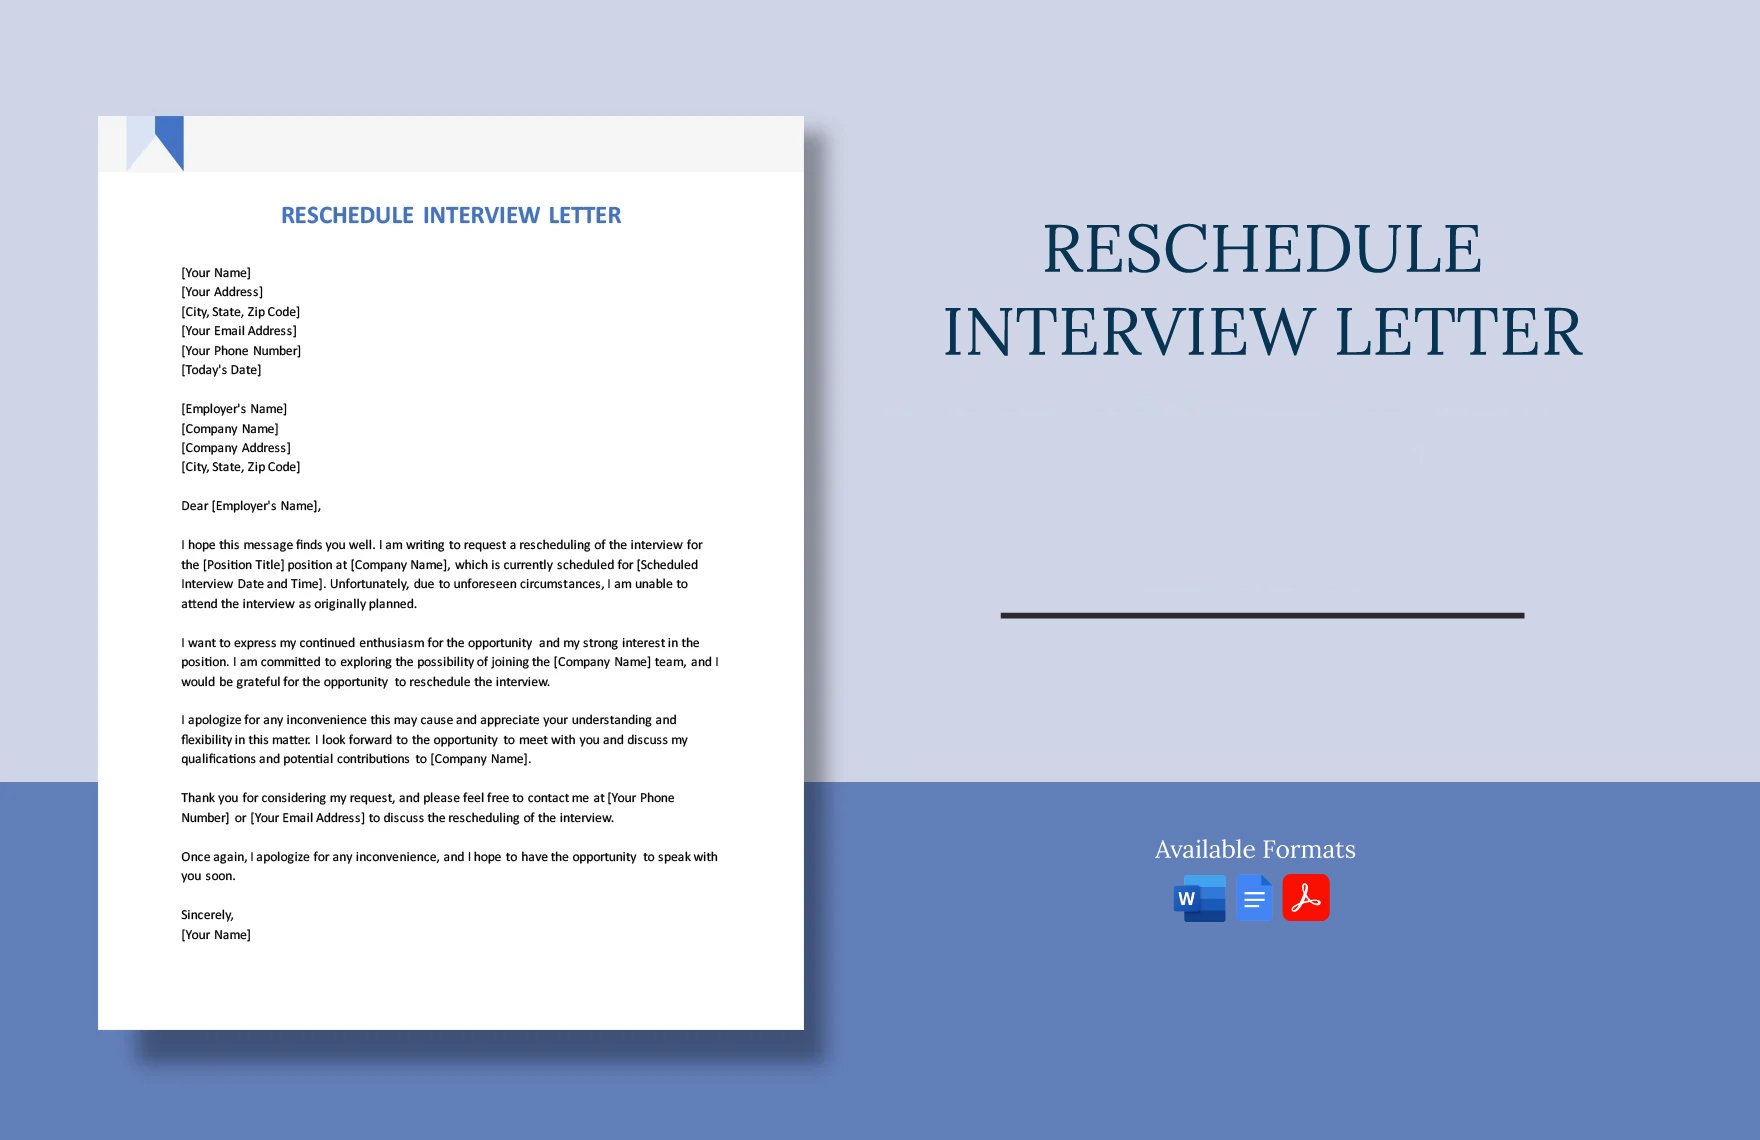 Reschedule Interview Letter in Word, Google Docs, PDF